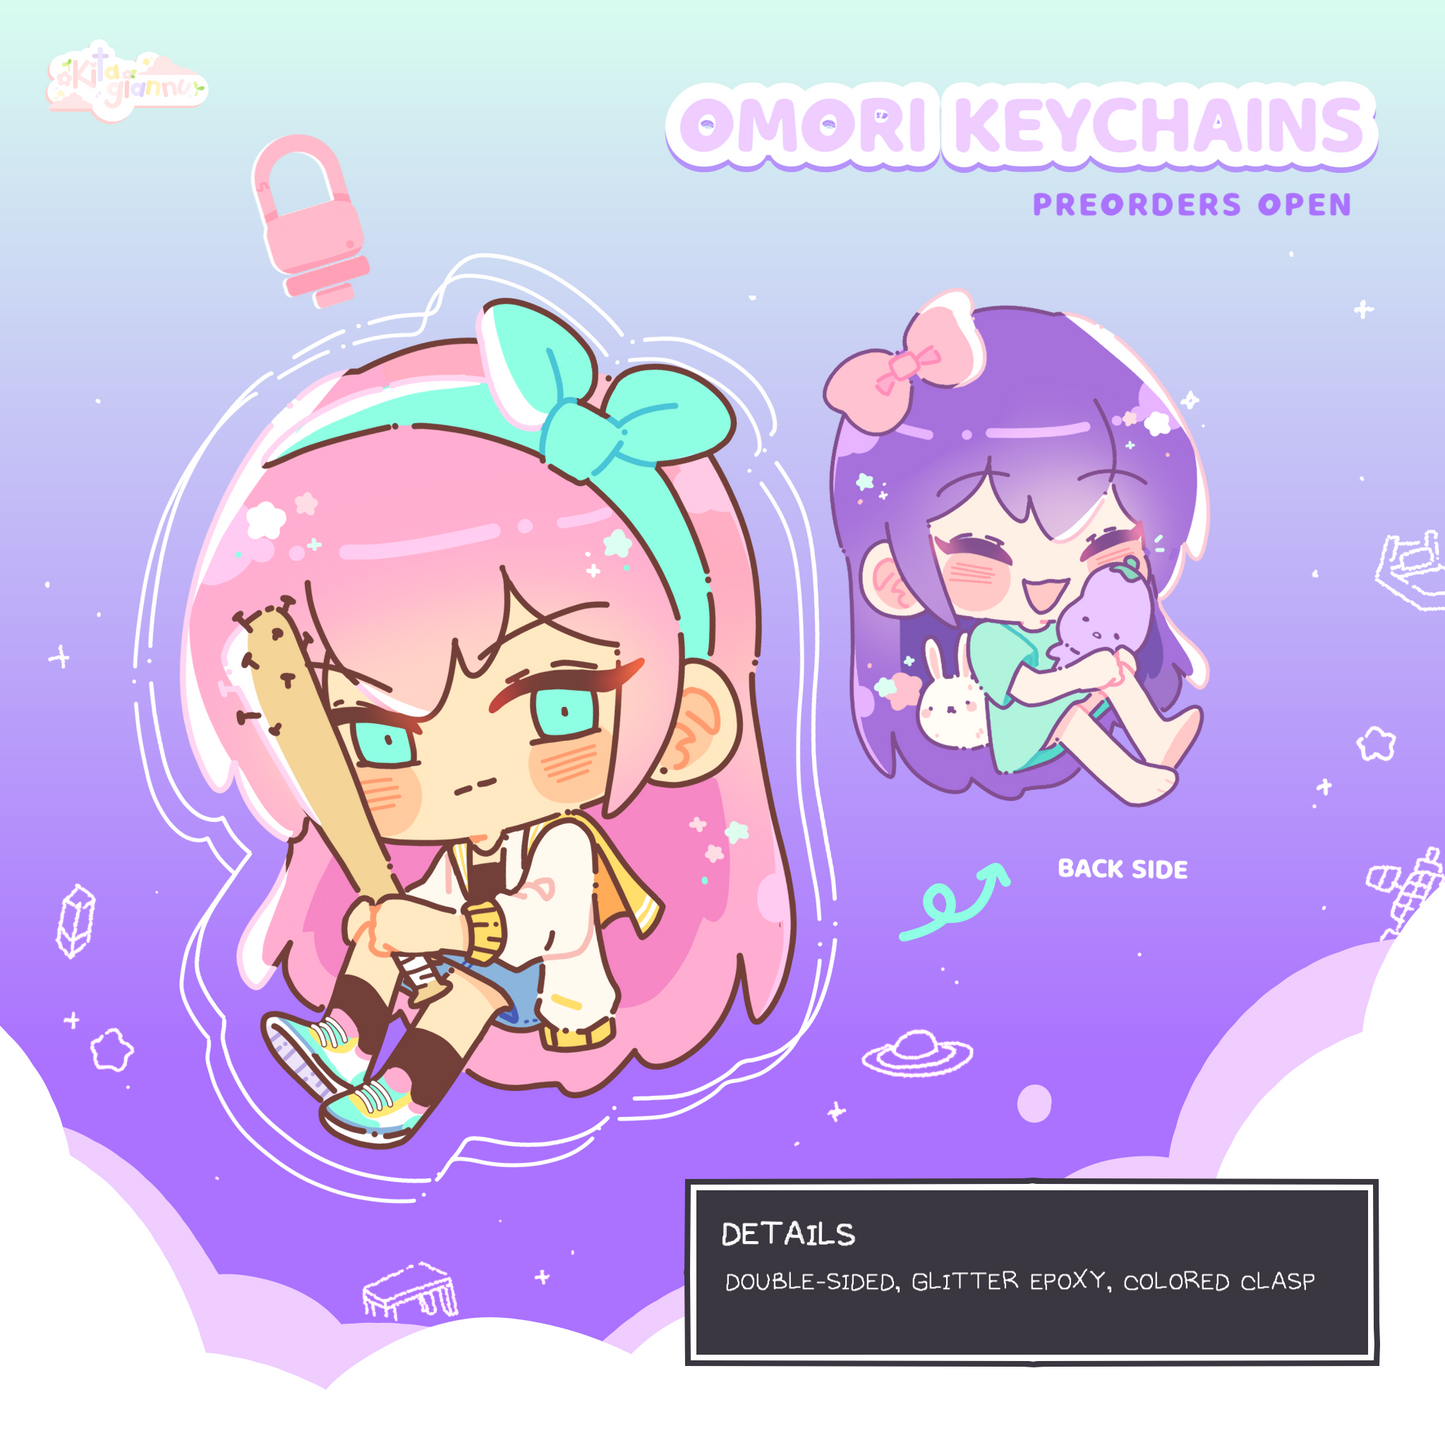 Omori | Keychains